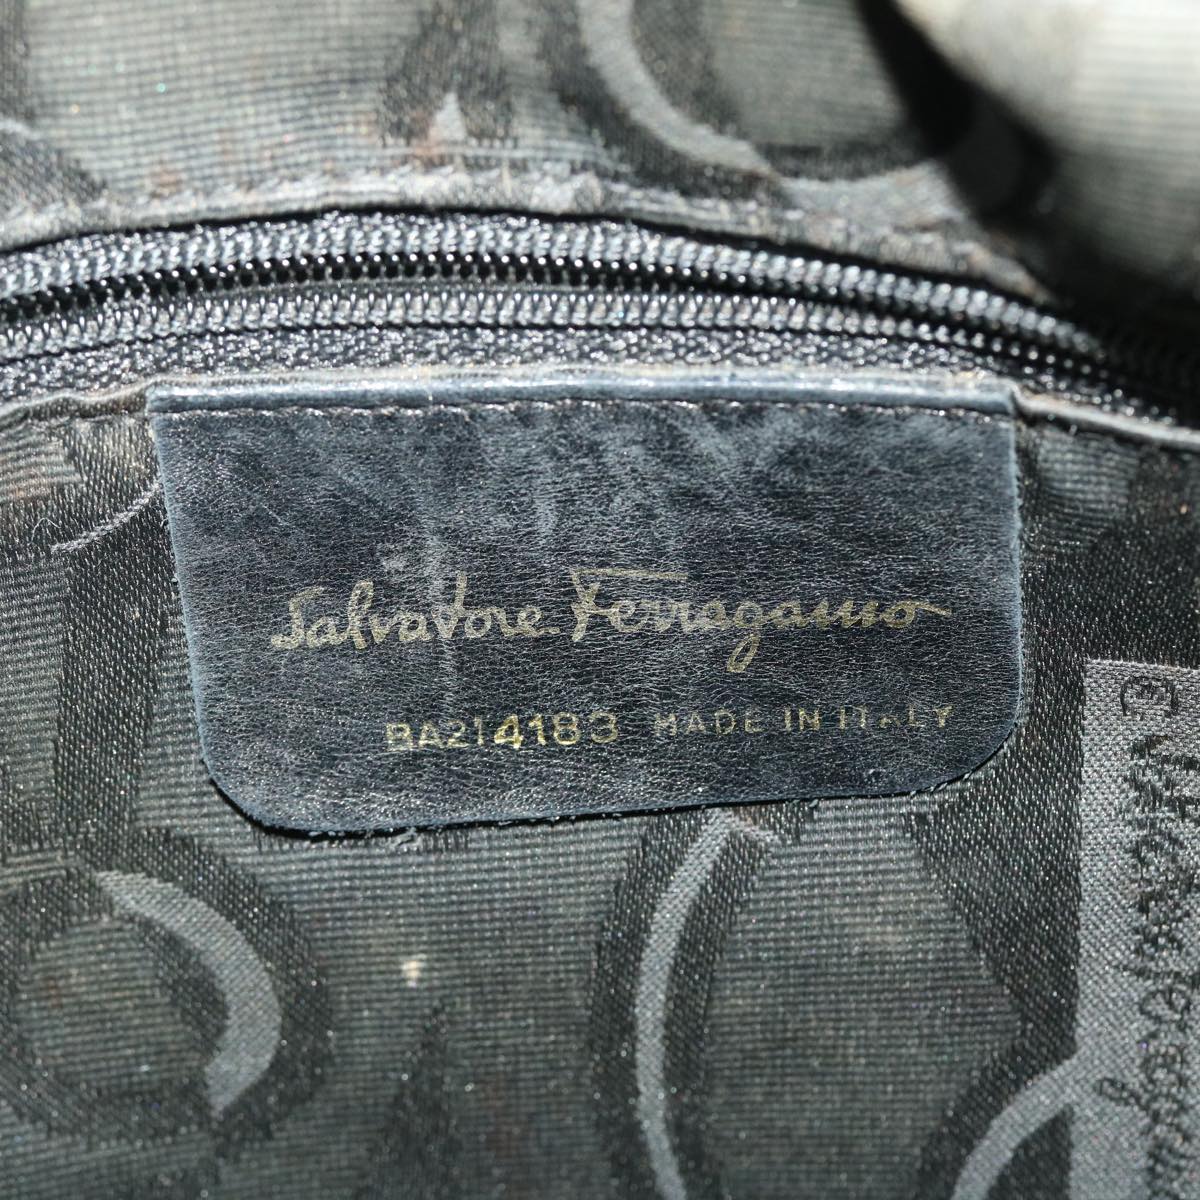 Salvatore Ferragamo Shoulder Bag Suede Black Auth 39447